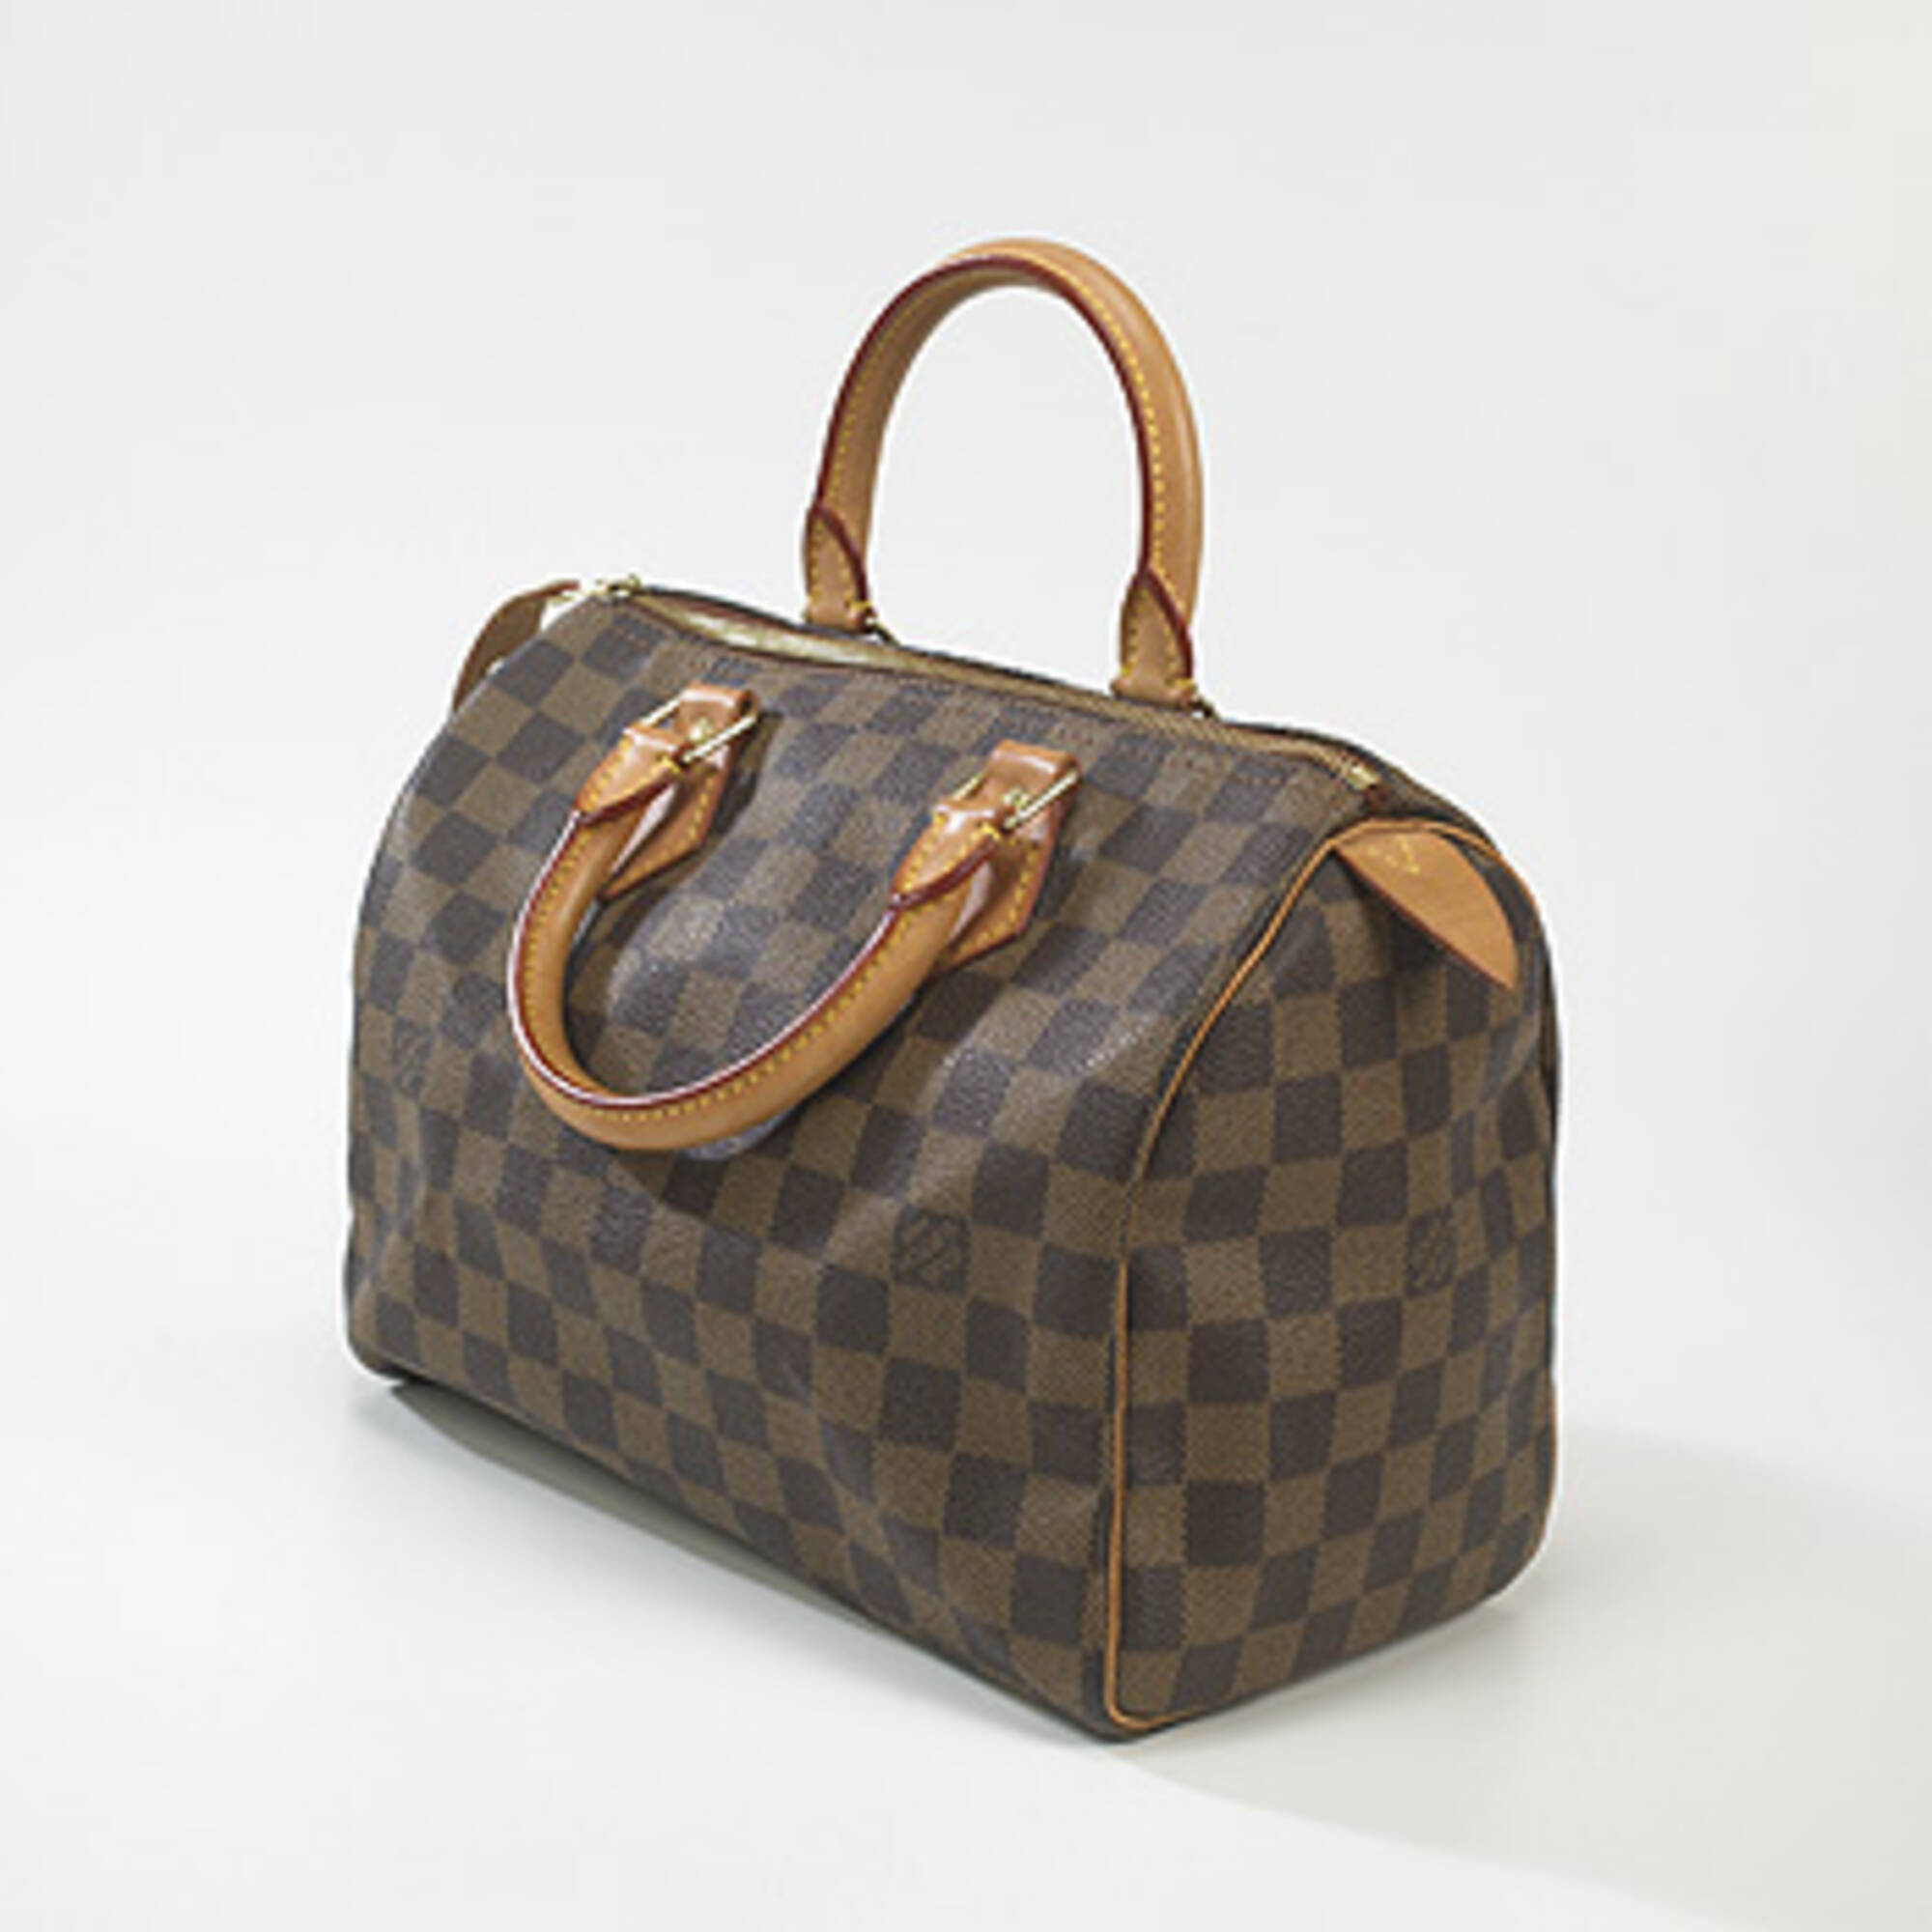 At Auction: LOUIS VUITTON Handbag SPEEDY 30.